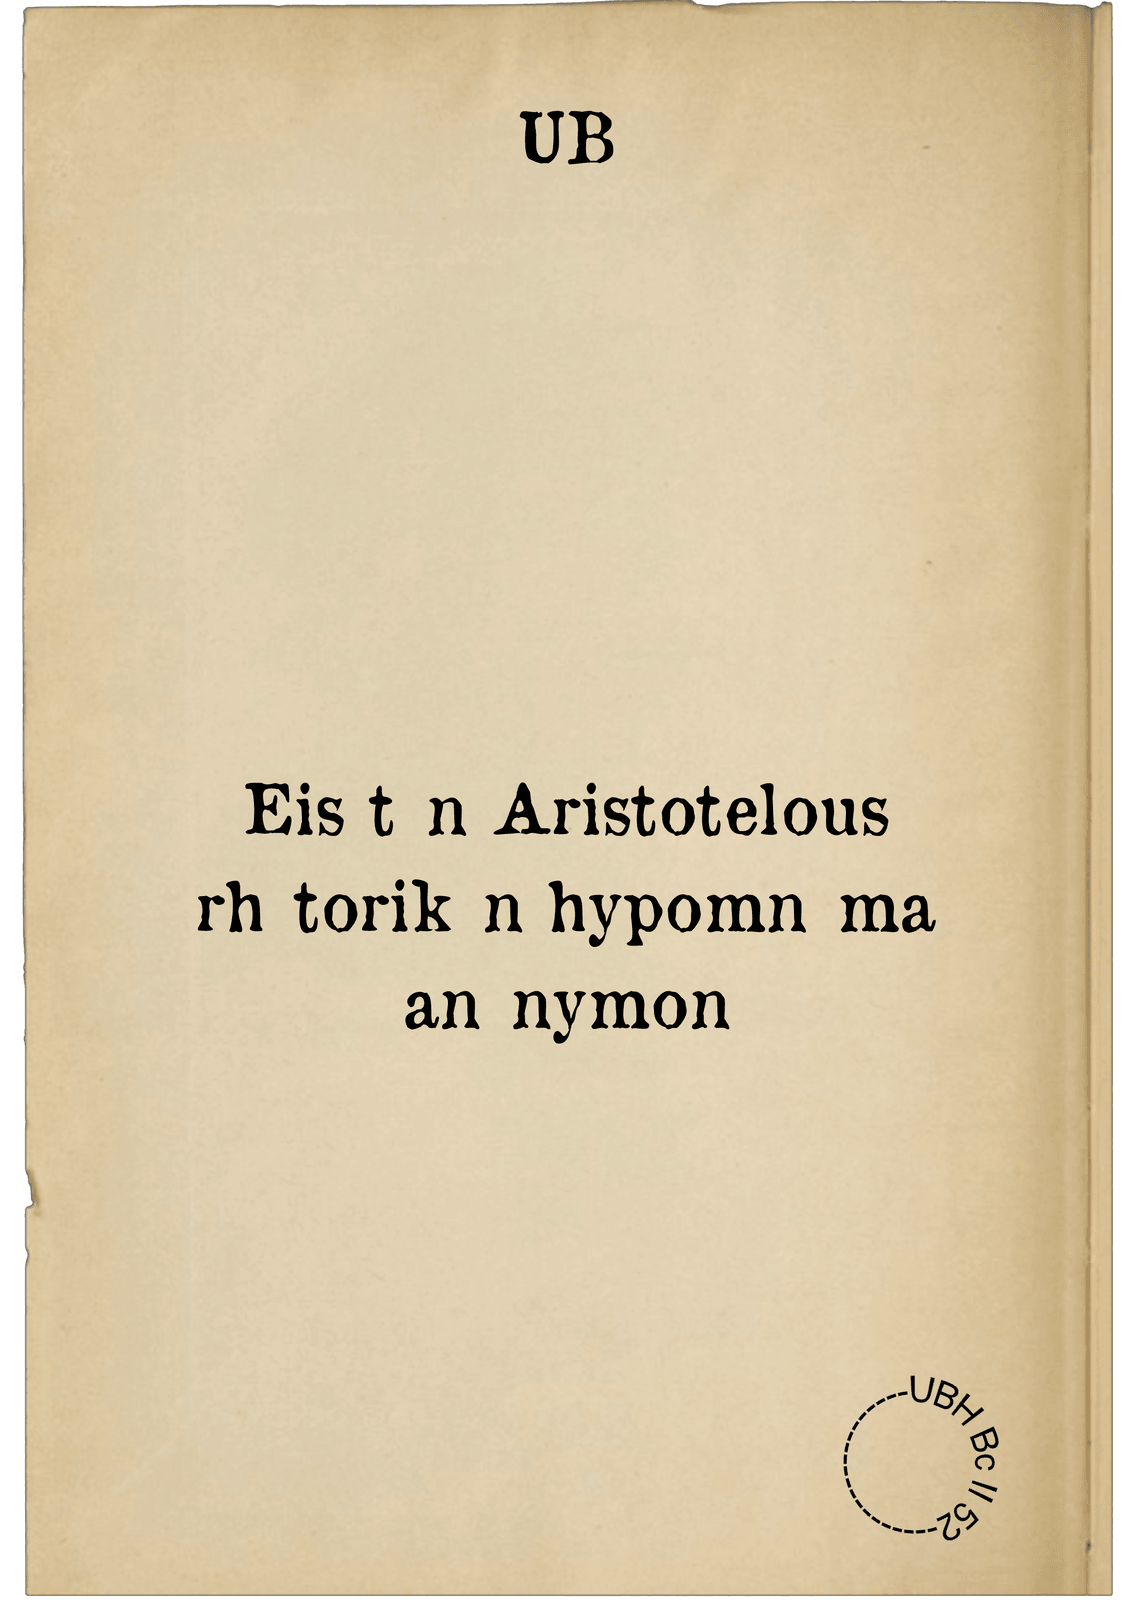 Eis tēn Aristotelous rhētorikēn hypomnēma anōnymon